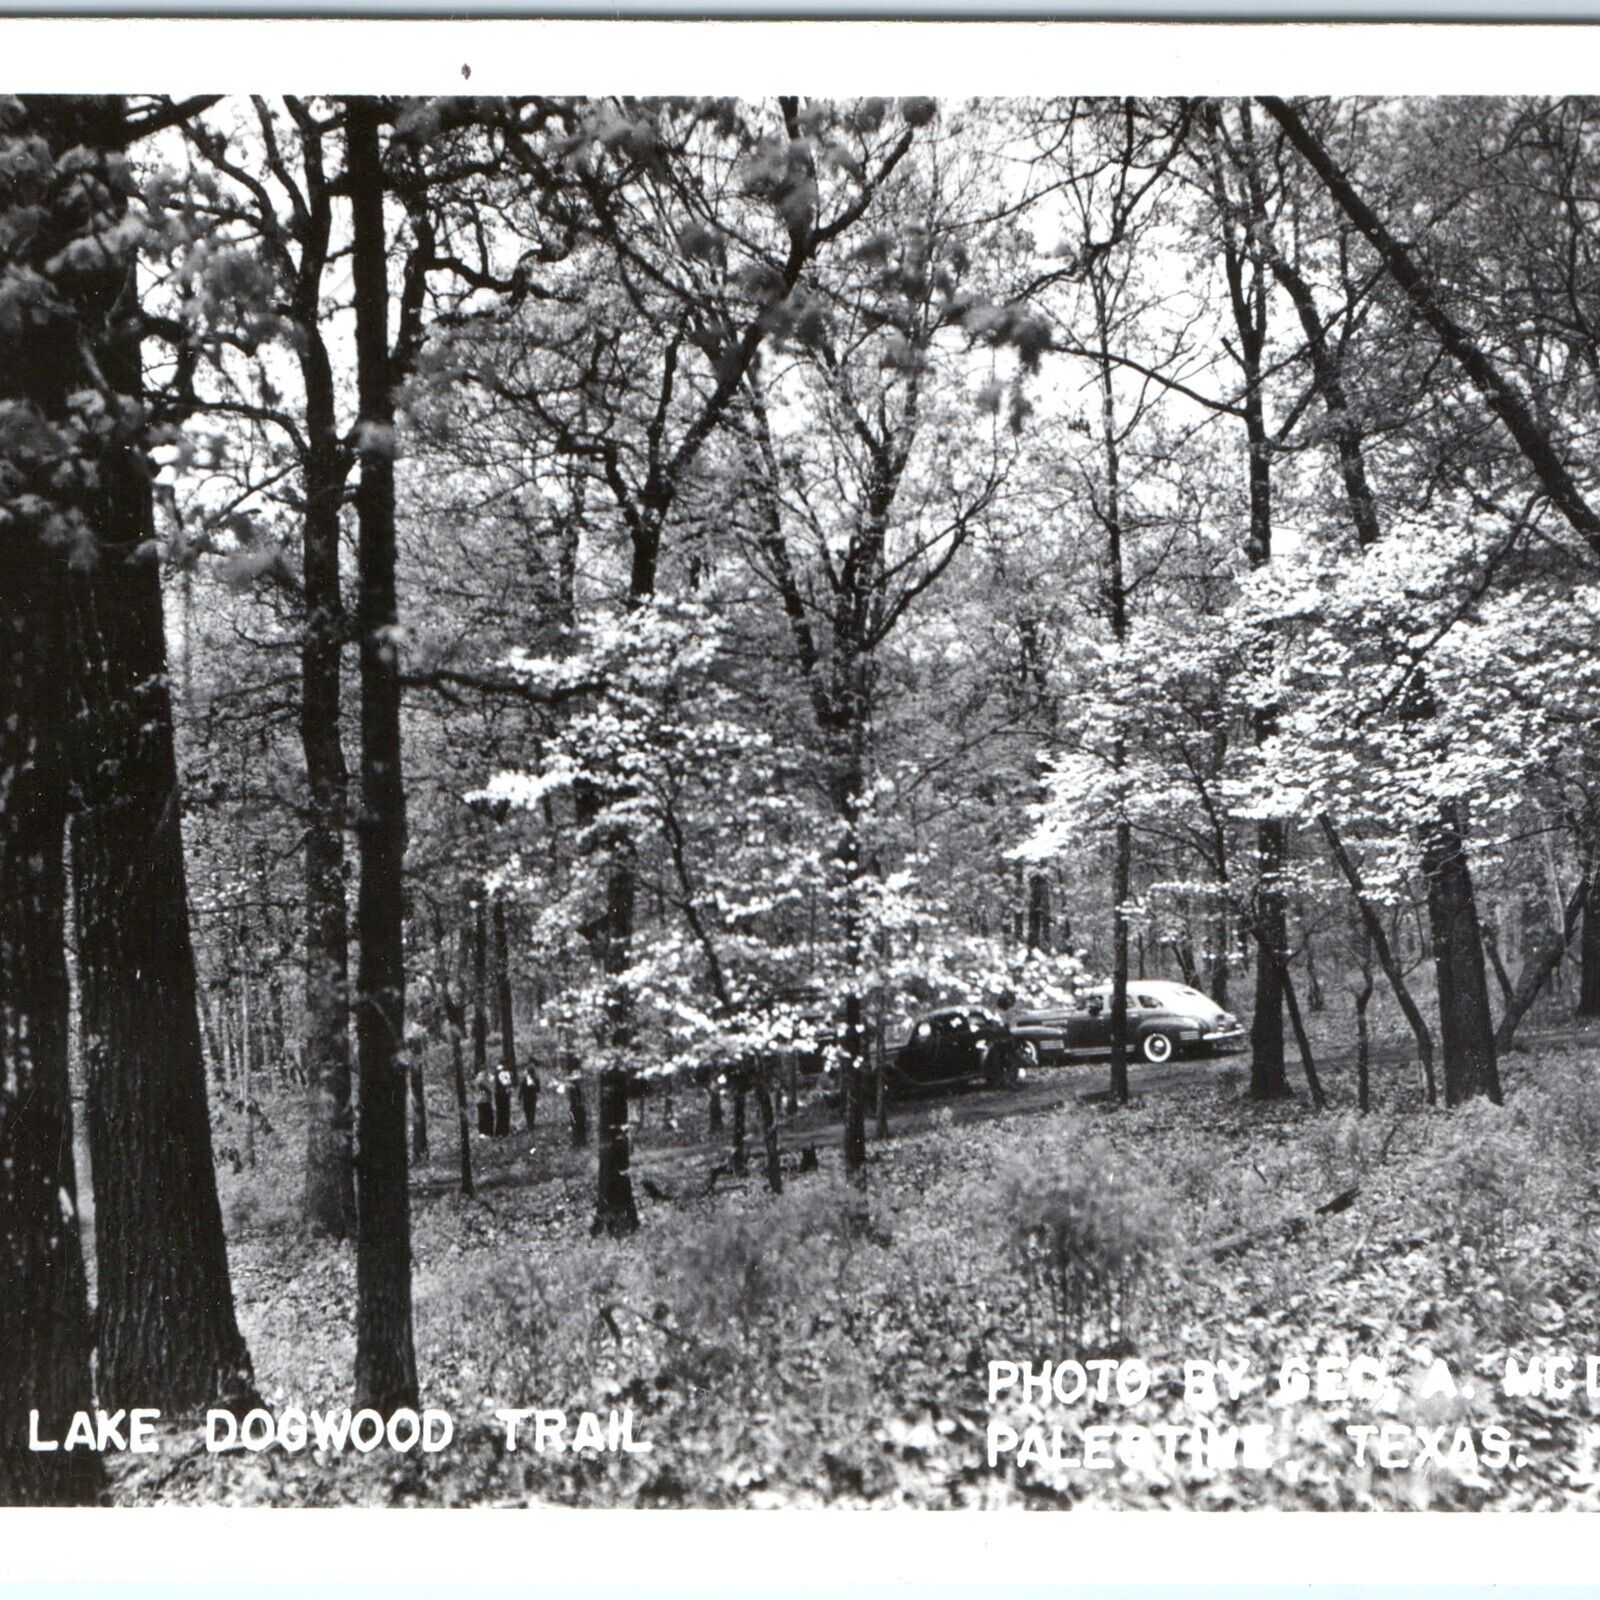 c1950s Palestine, TX RPPC Davey Lake Dogwood Trail Real Photo Postcard Cars A120